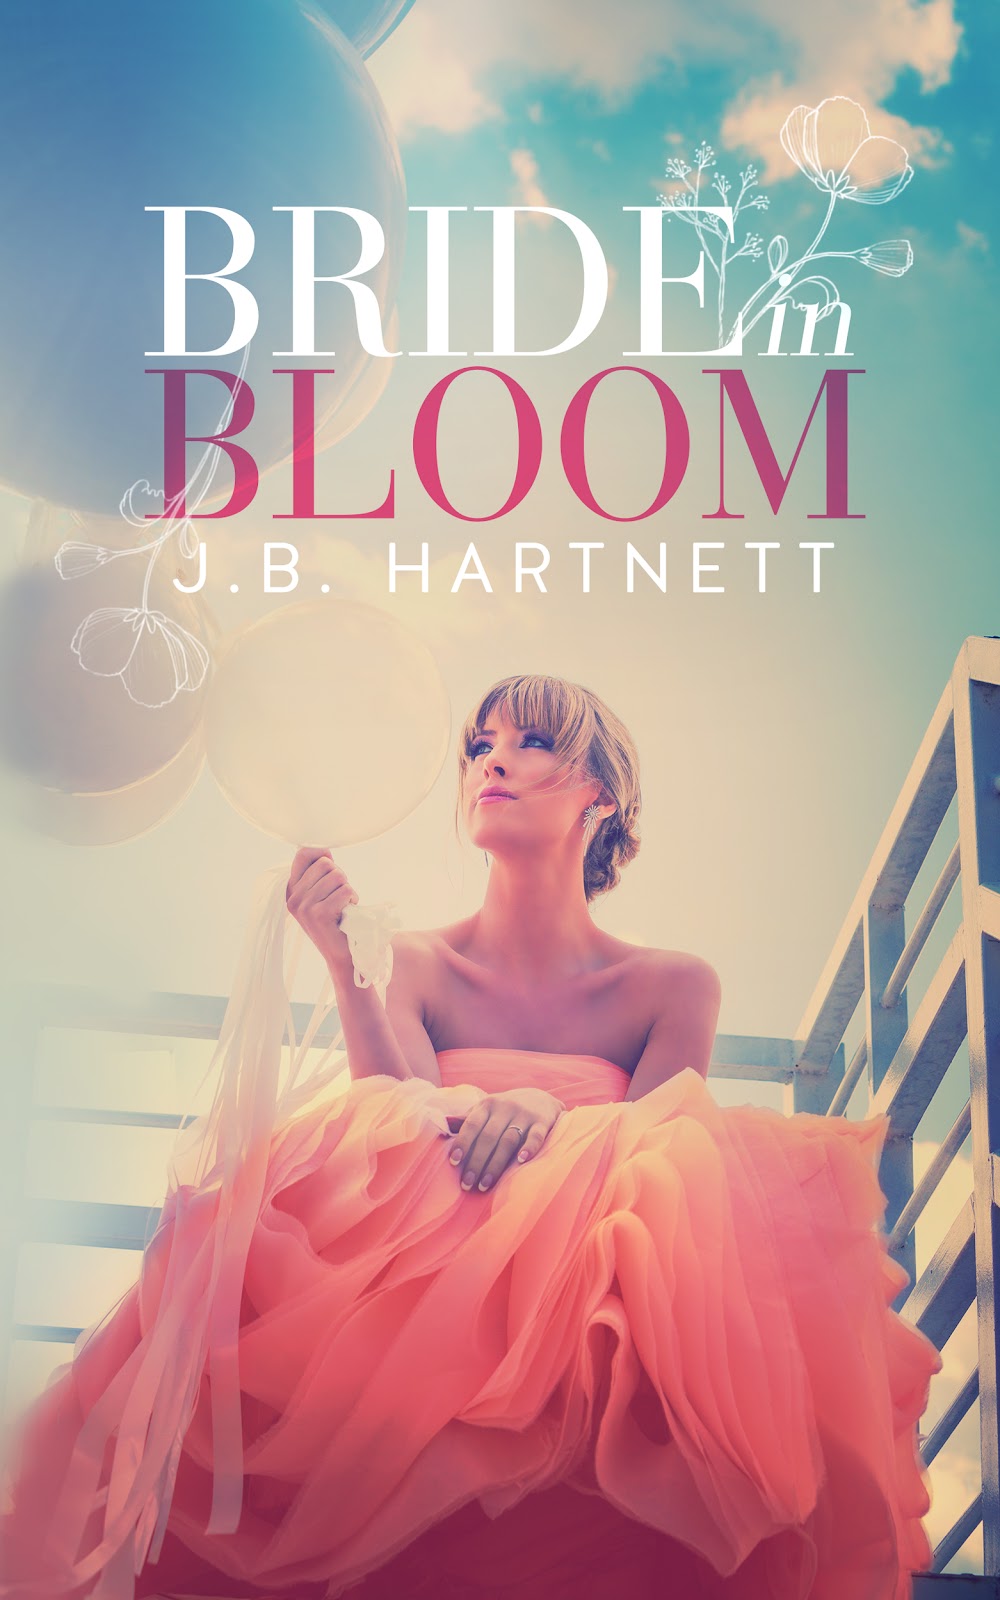 BRIDE IN BLOOM JB HARTNETT AMAZON KINDLE EBOOK COVER.jpg